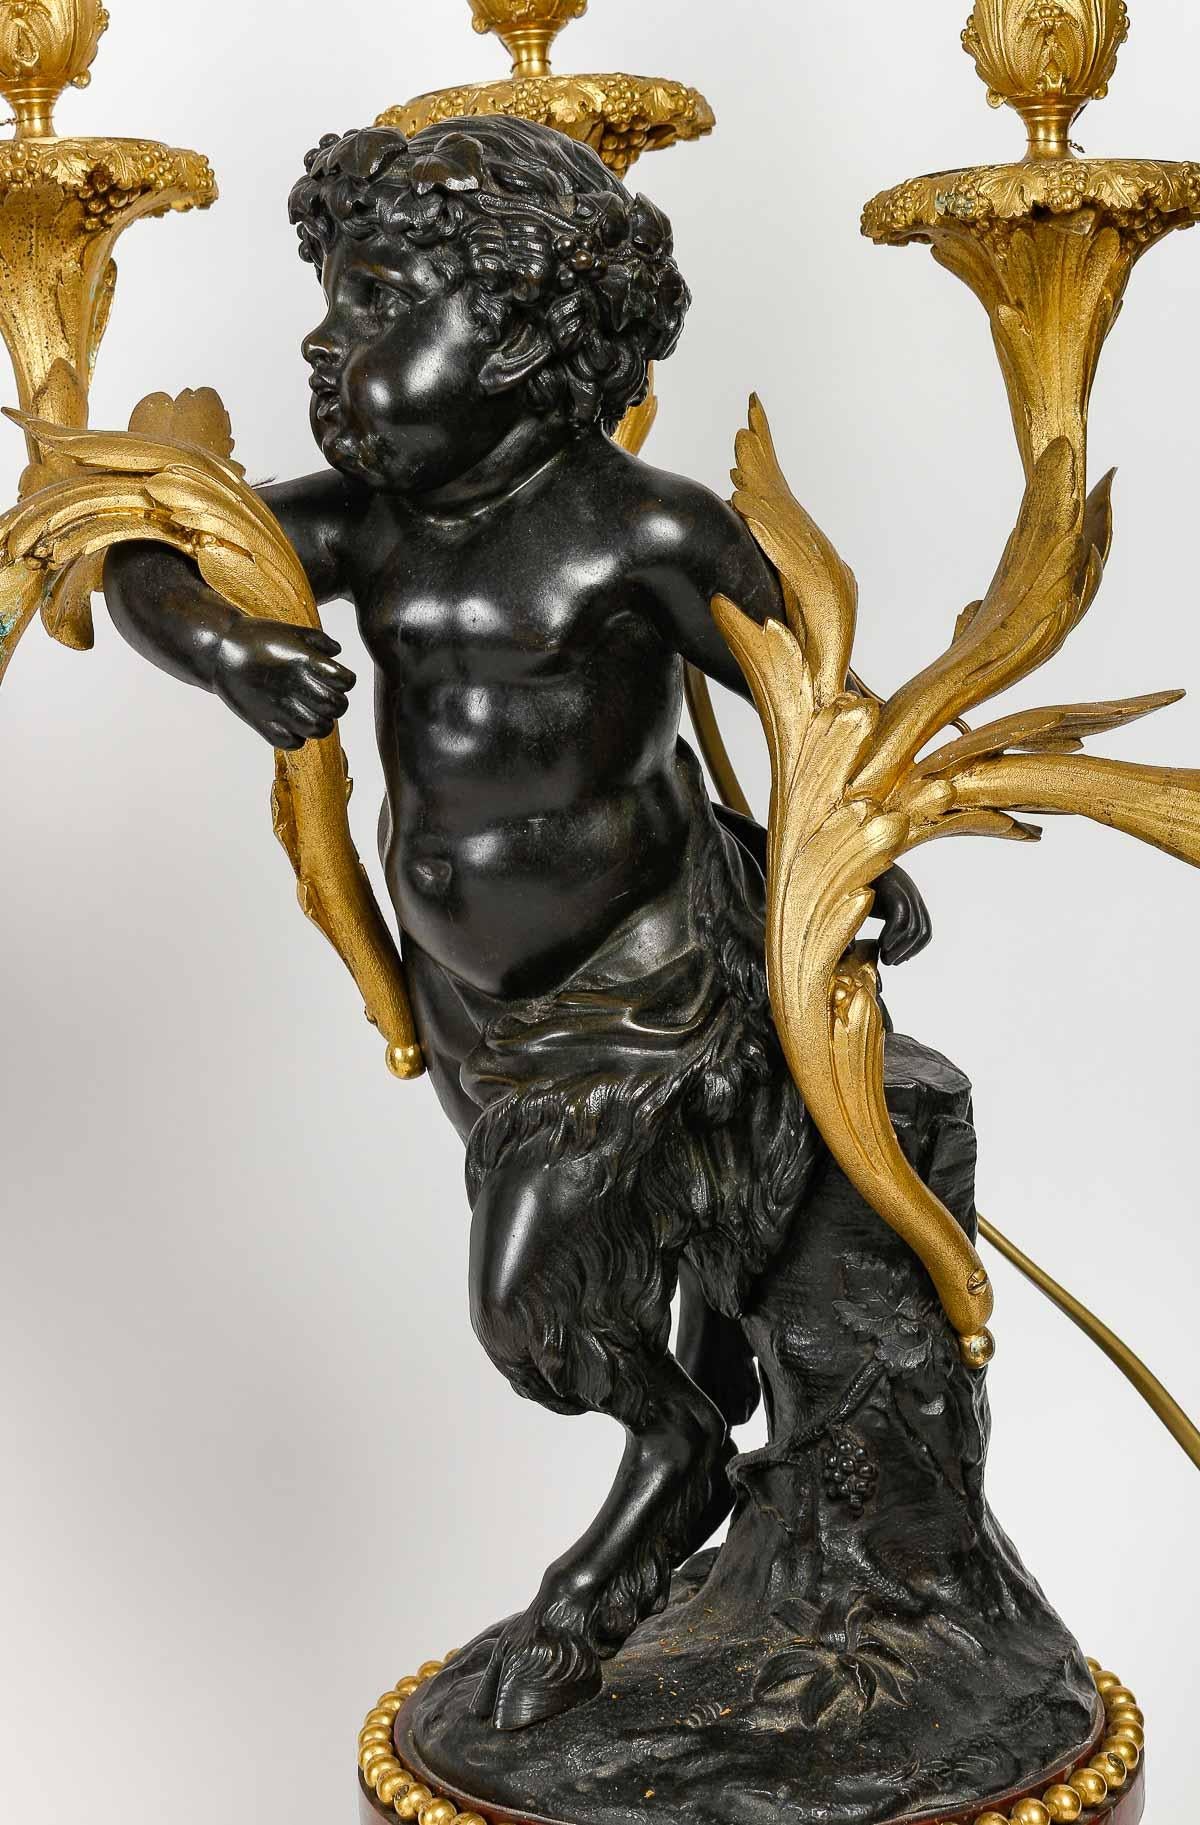 Pair of Amours Candelabra, Grande décoration, Gilt bronze, Antique bronze. 1